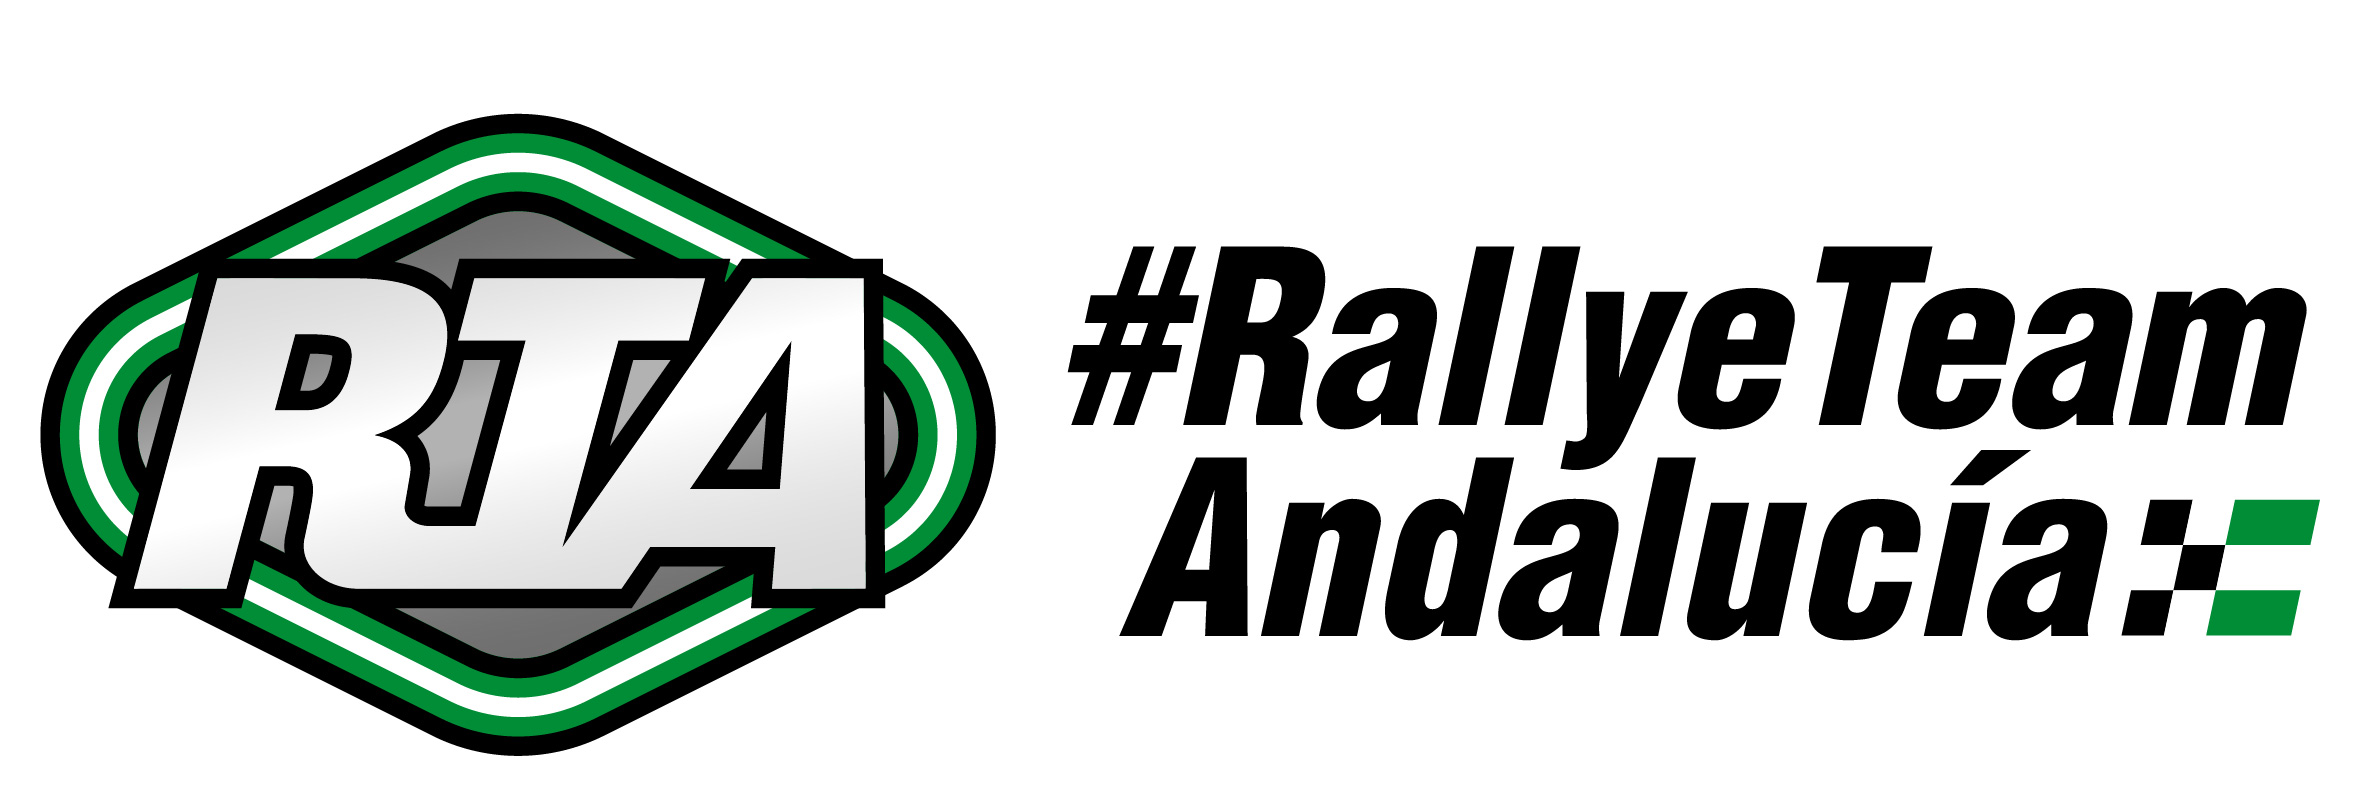 Rallye Team Andalucia